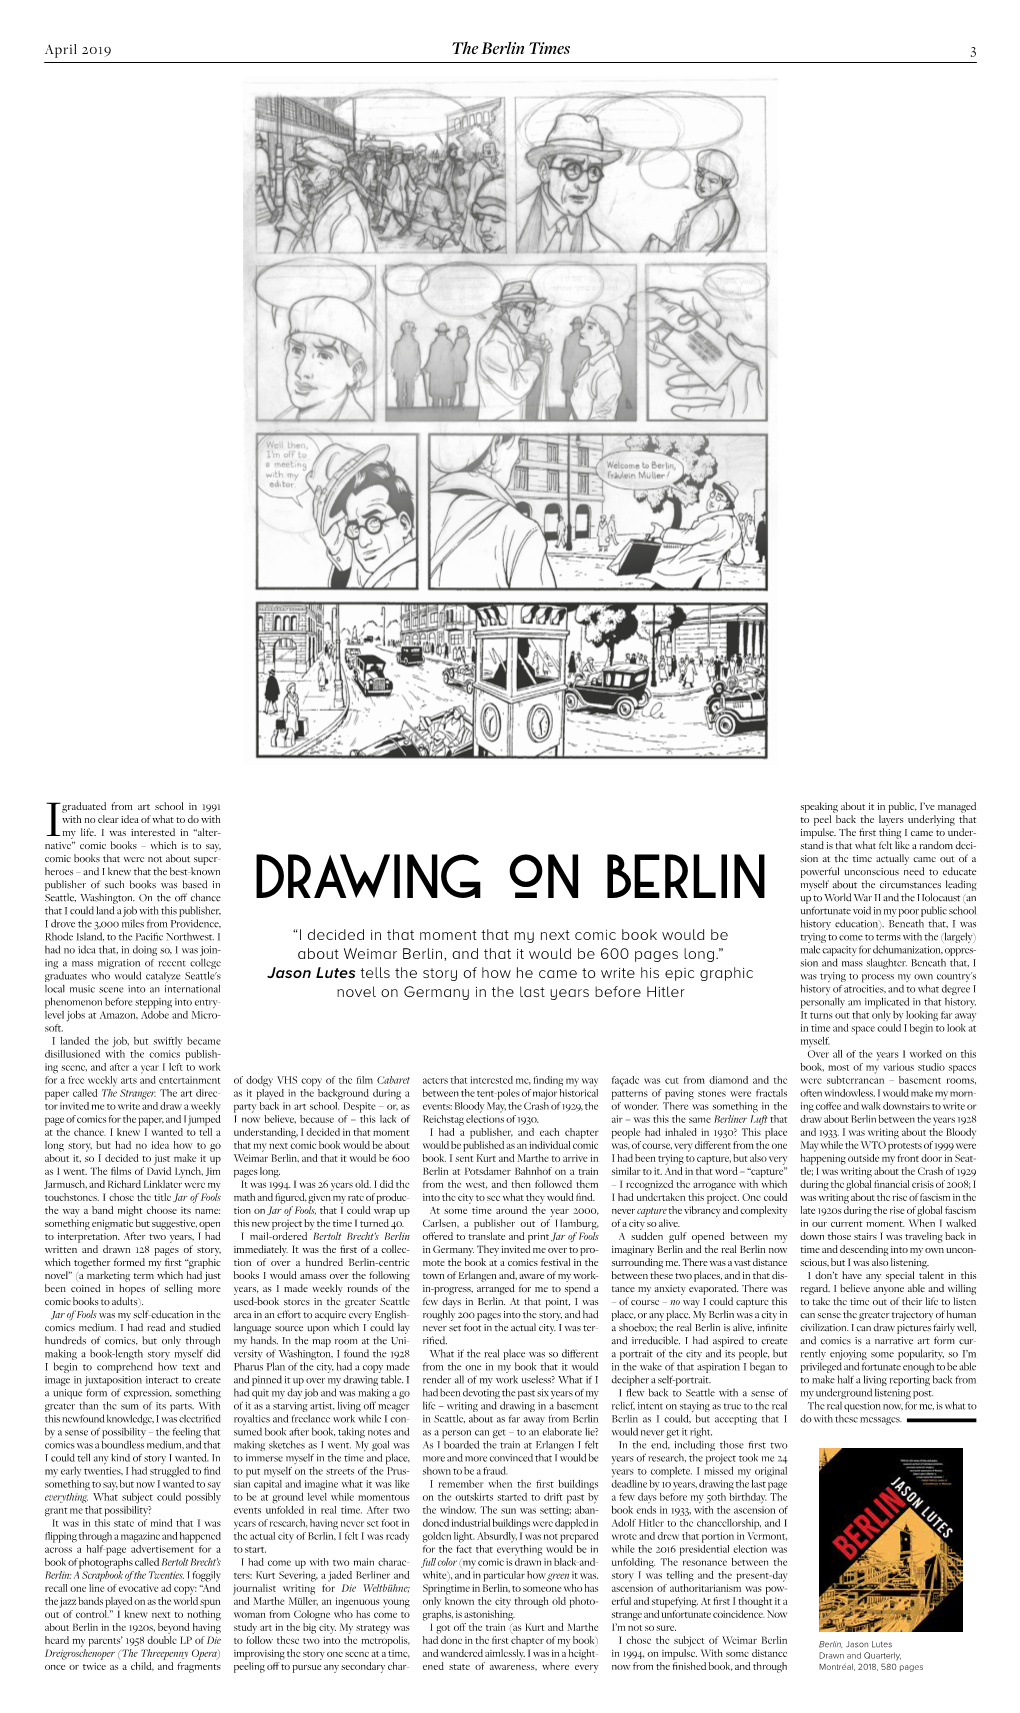 Drawing on Berlin